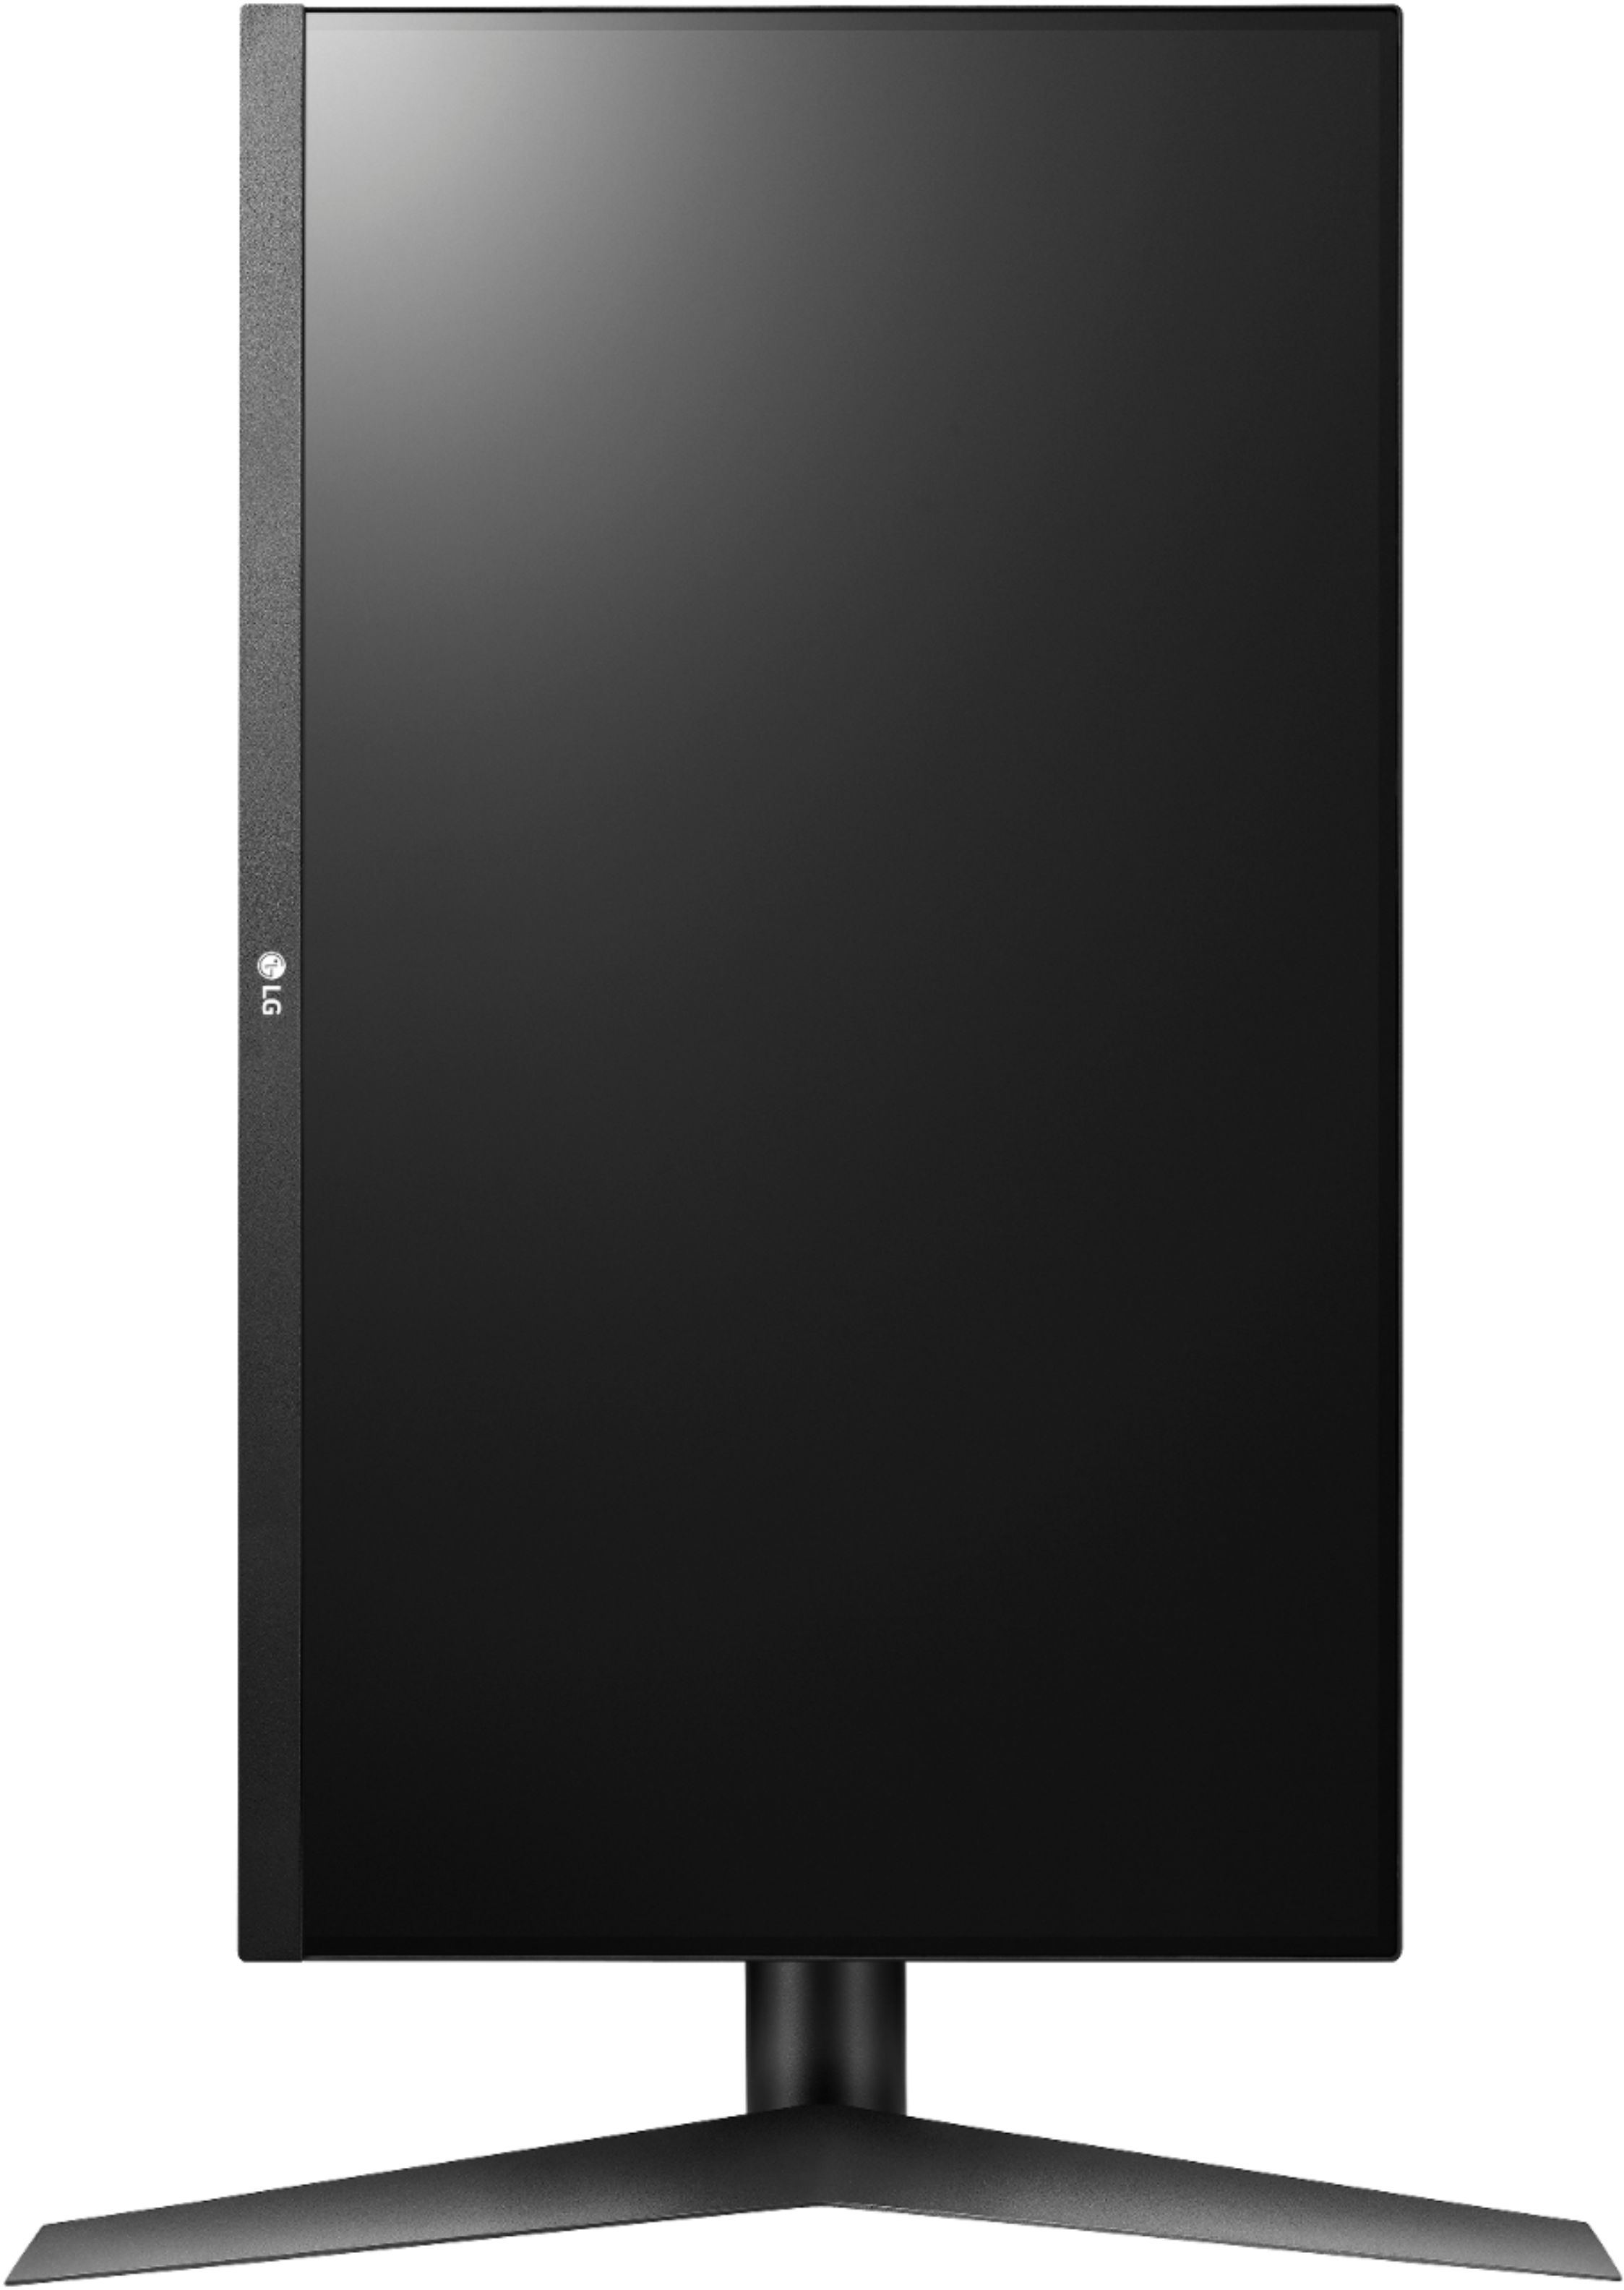 LG UltraGear 27” IPS QHD 1-ms G-SYNC Compatibillity Monitor Black 27GN800-B  - Best Buy